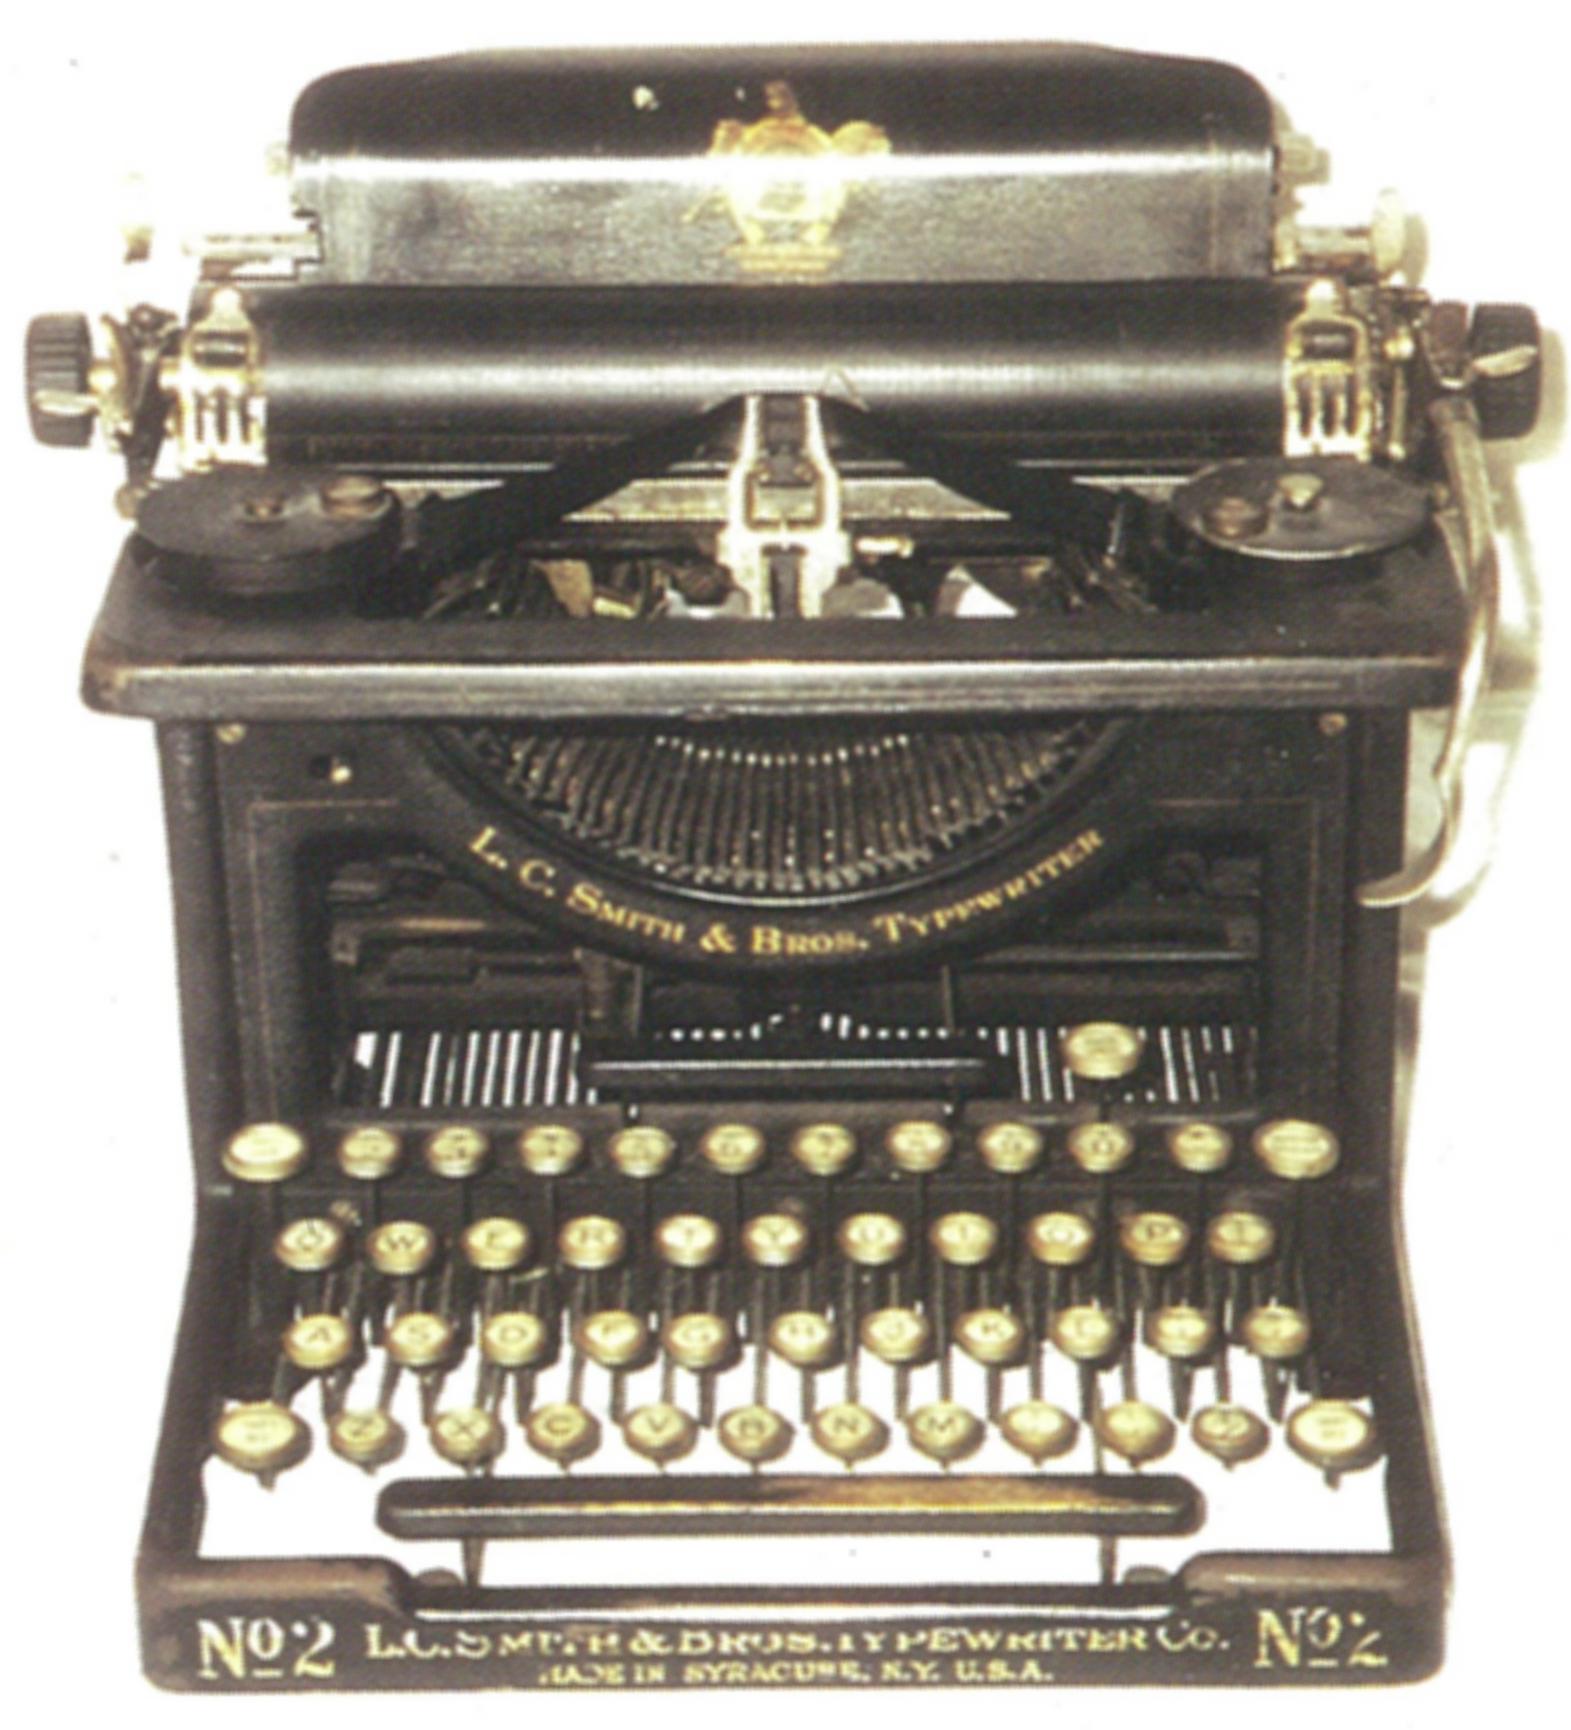 L. C. Smith & Bros. Typewriter No.2